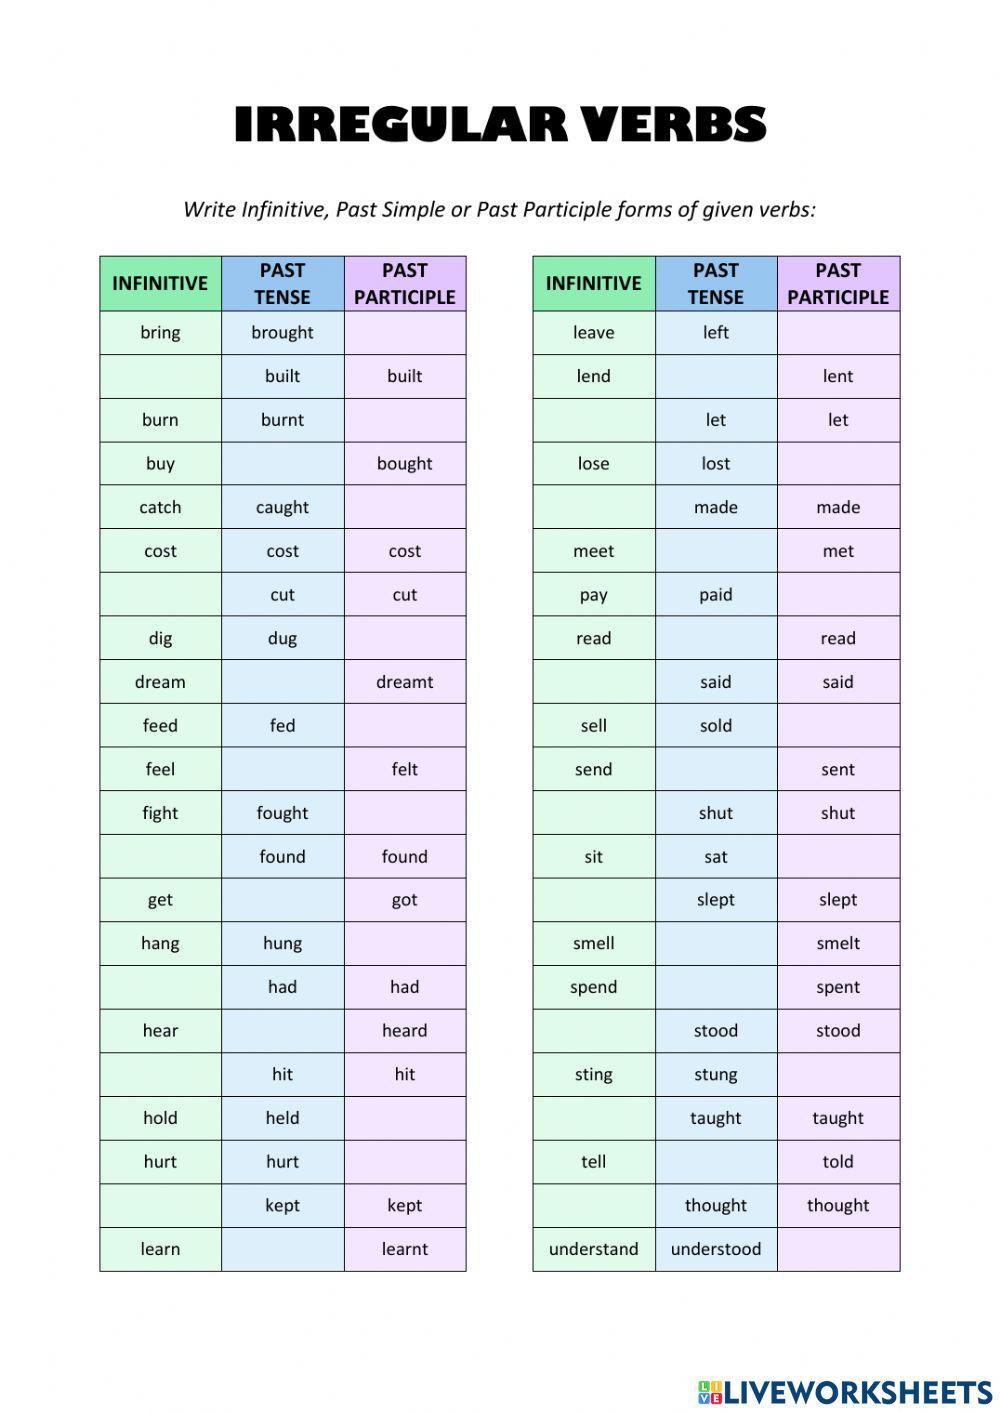 Tabla De Irregular Verbs Irregular verbs - Complete the table worksheet | Live Worksheets